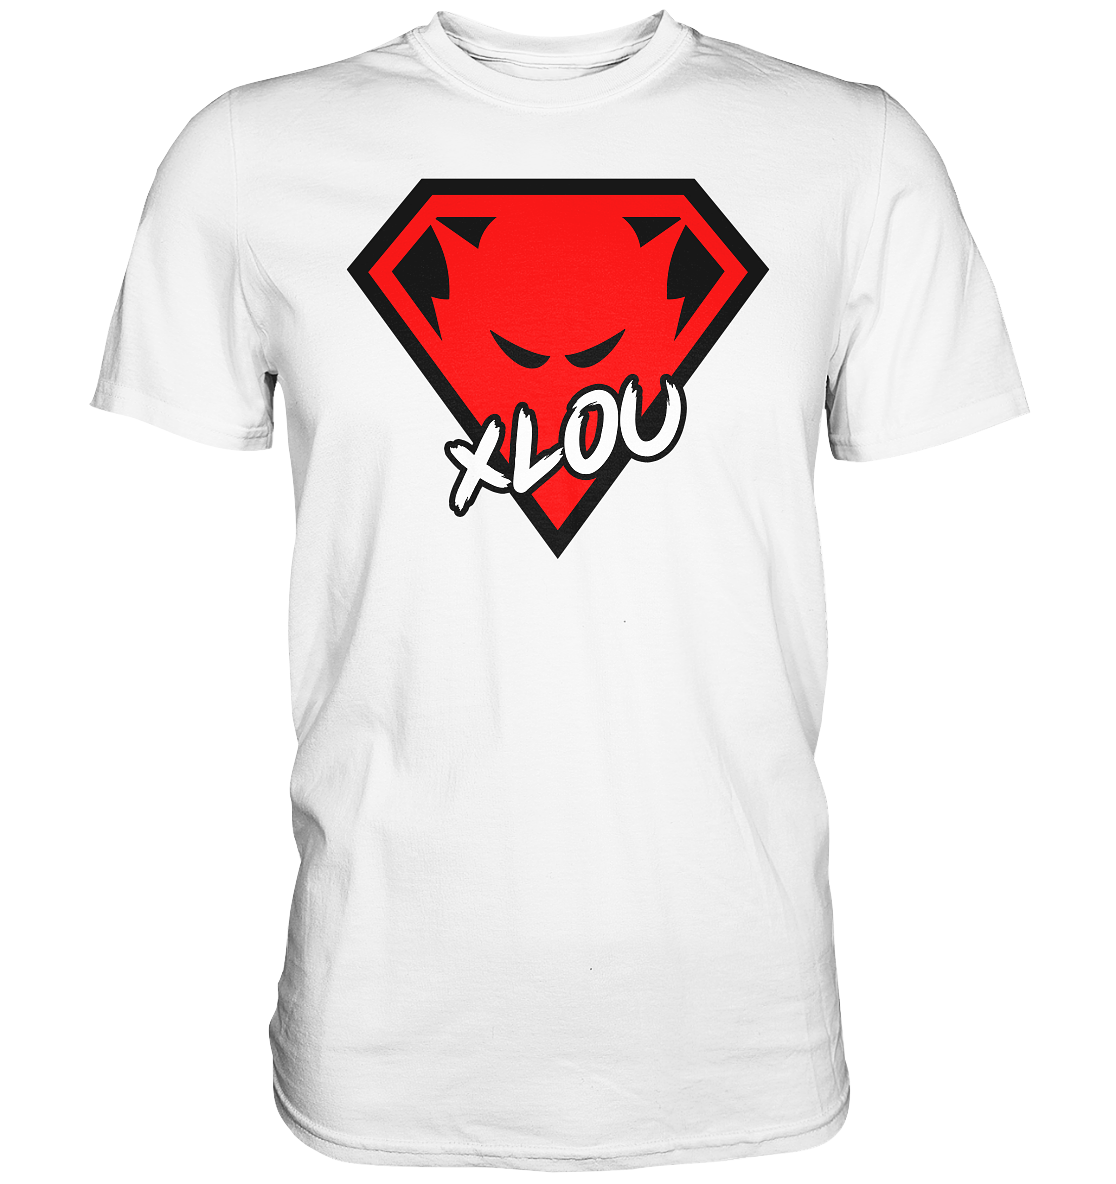 XLOU - Basic Shirt